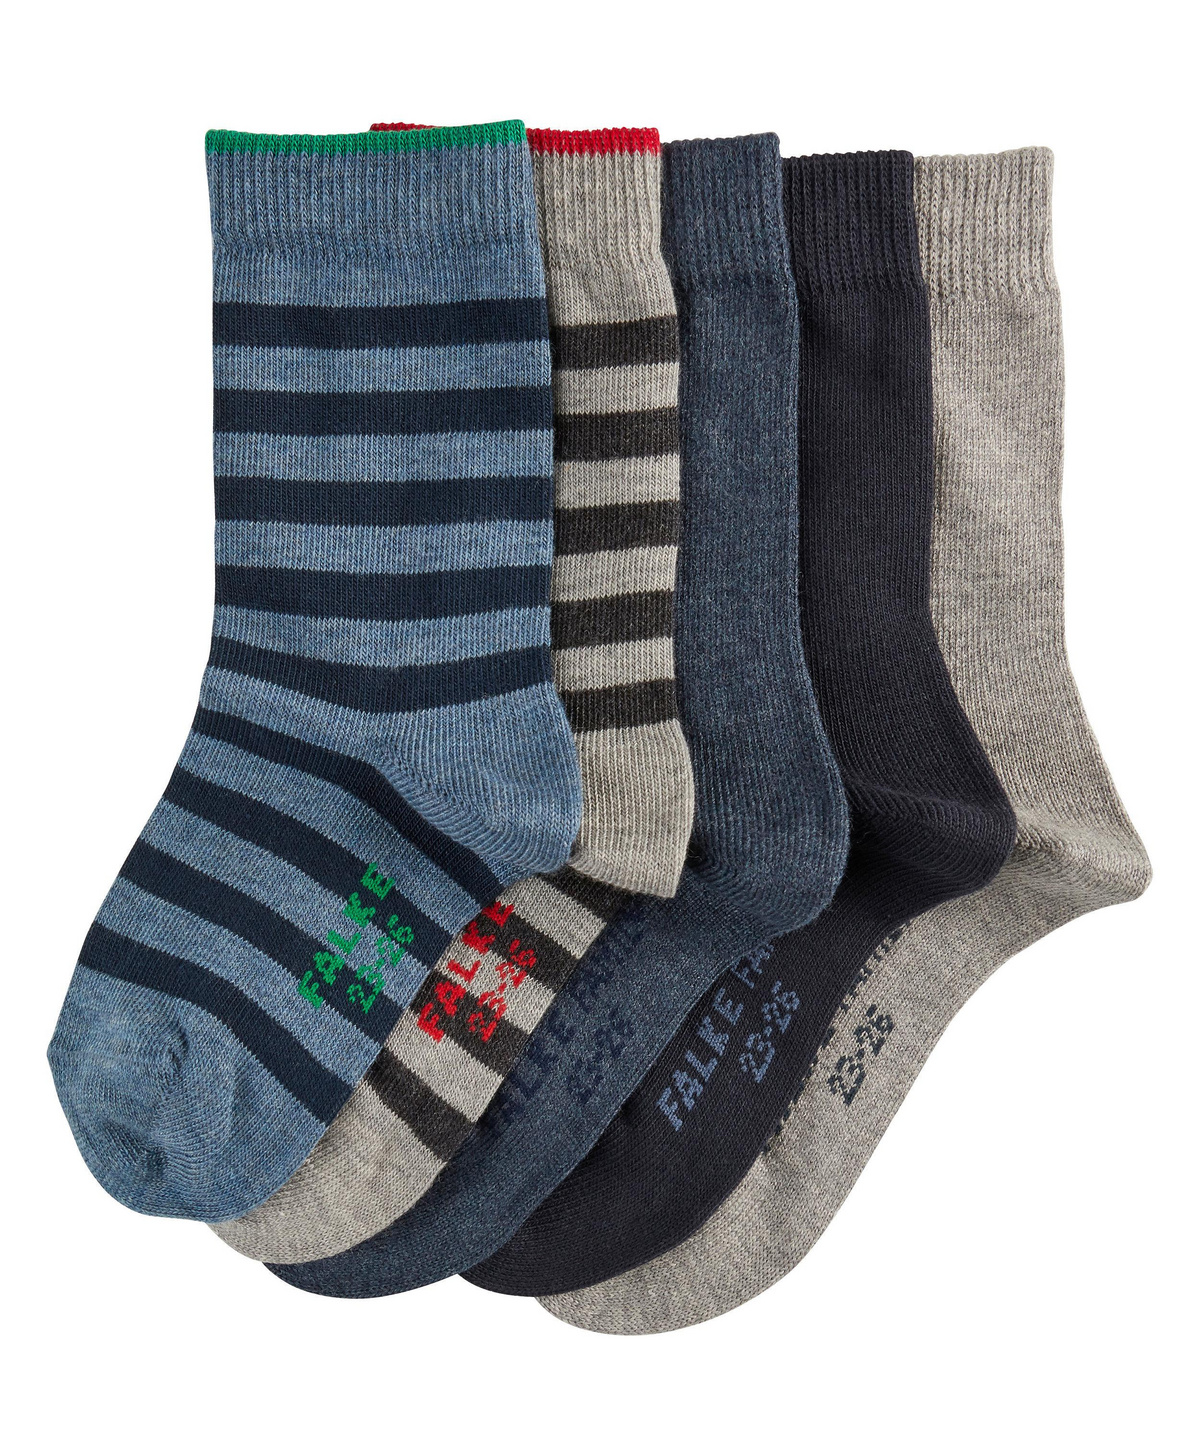 FALKE Unisex Kids Family Socks Cotton Black Grey More Colours Thin Calf Socks For Boys Or Girls Classic All Seasons Plain Pattern For School Or Casual Looks 1 Pair